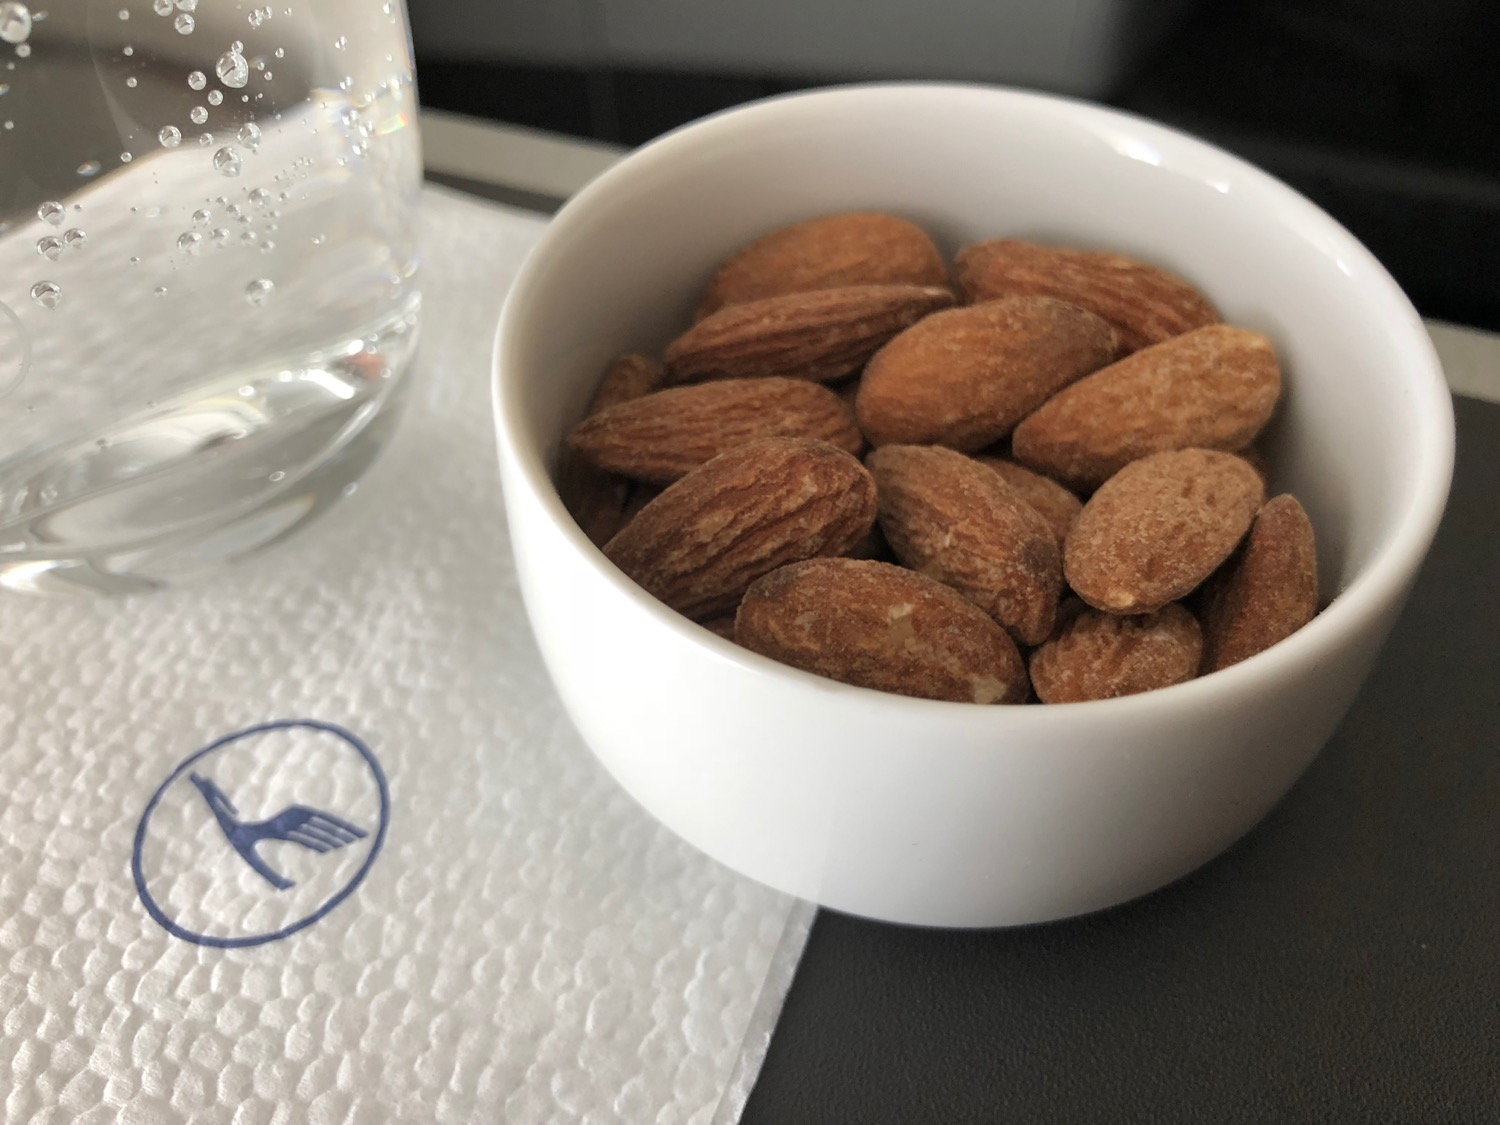 a bowl of almonds on a napkin